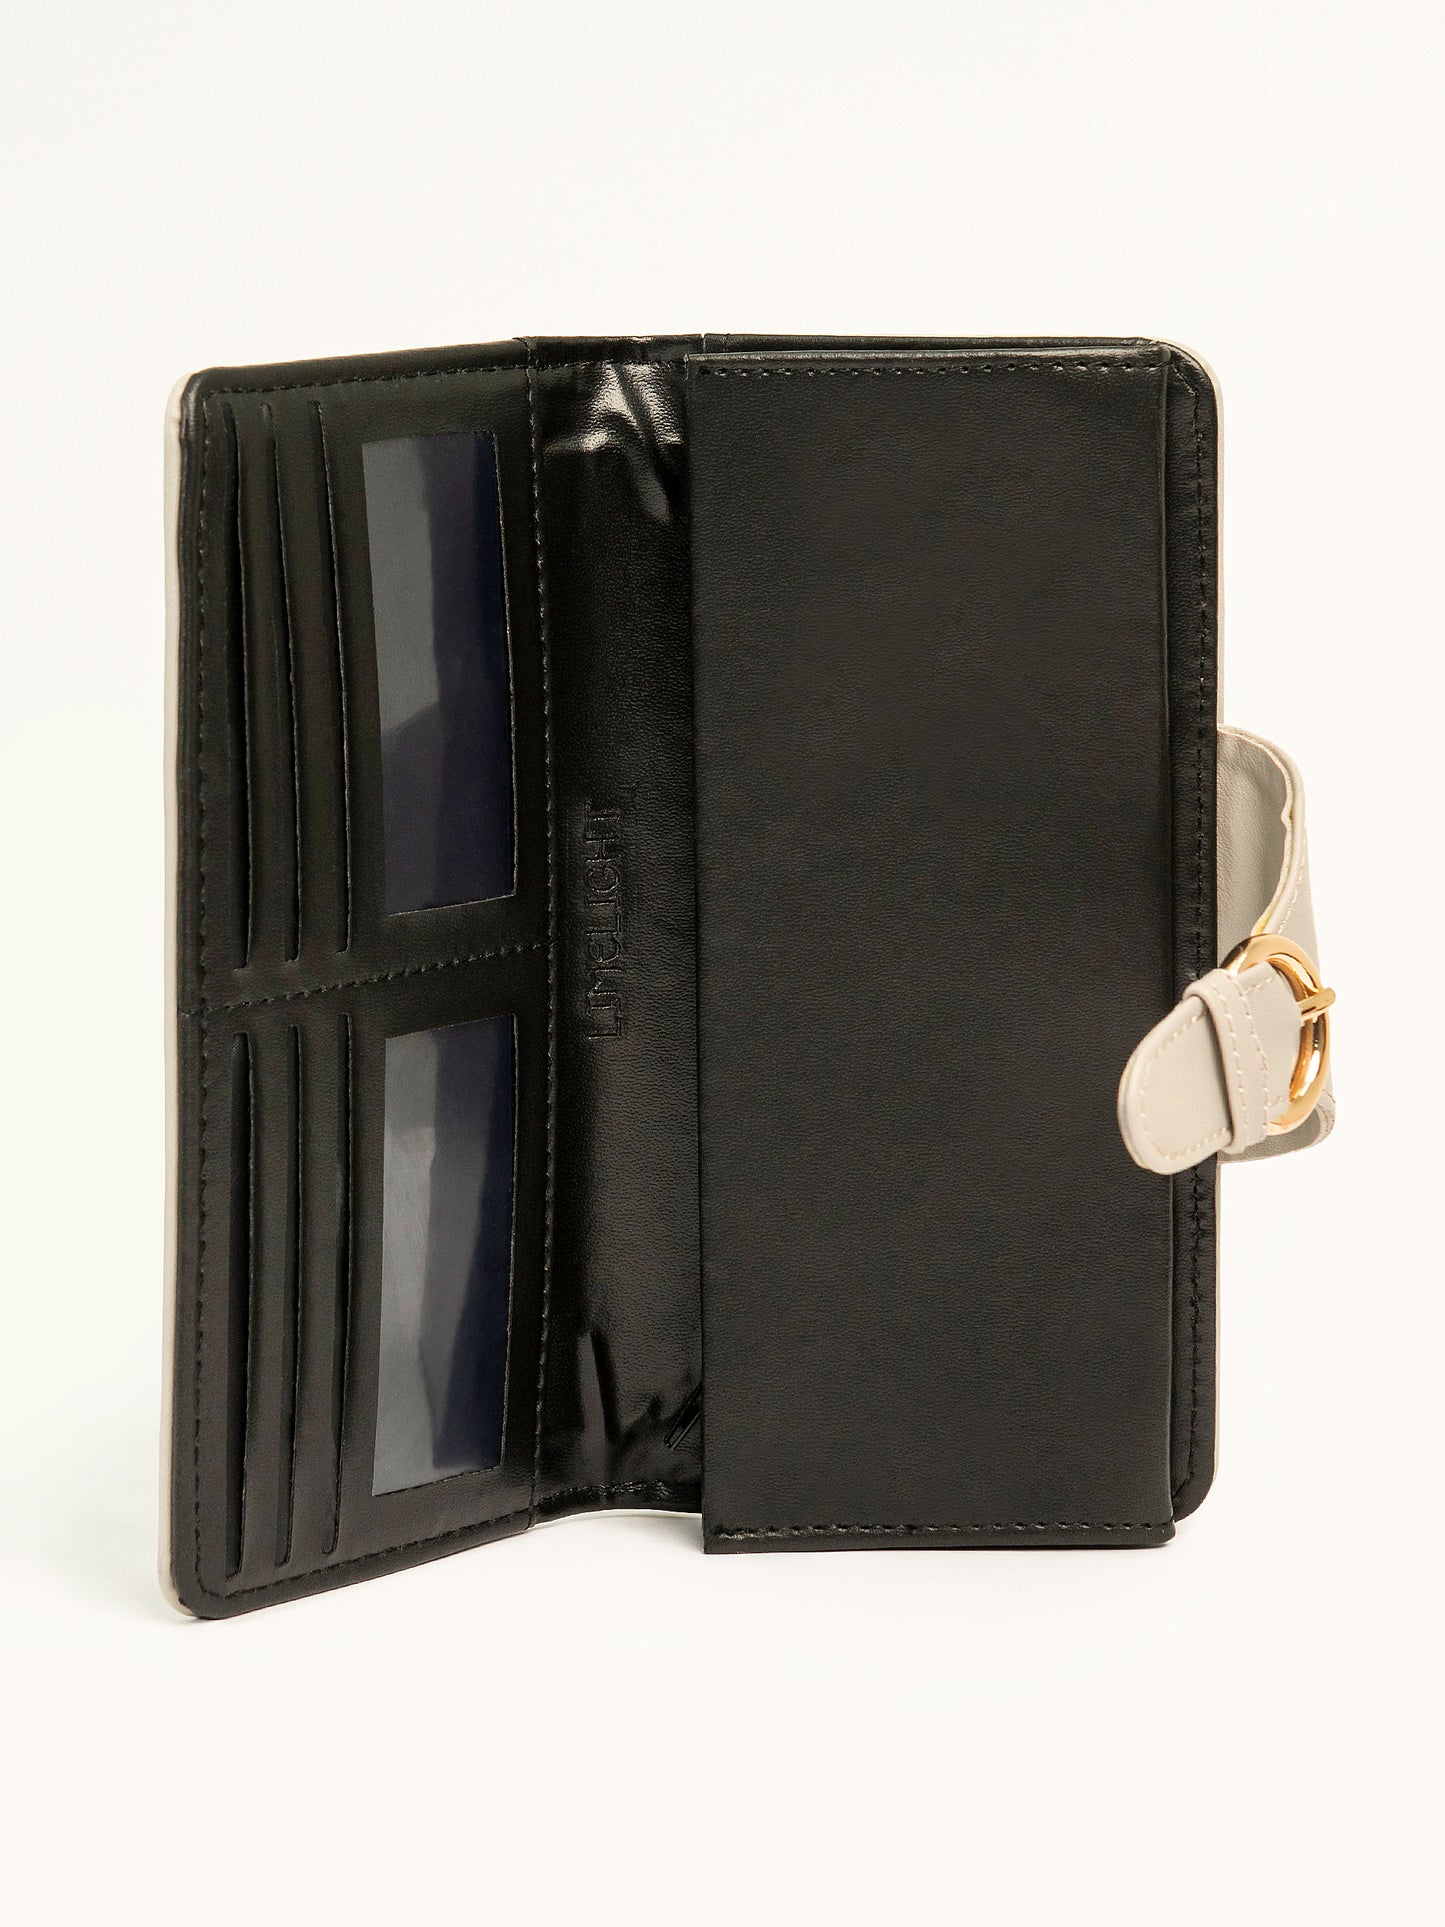 Buckled Strap Wallet